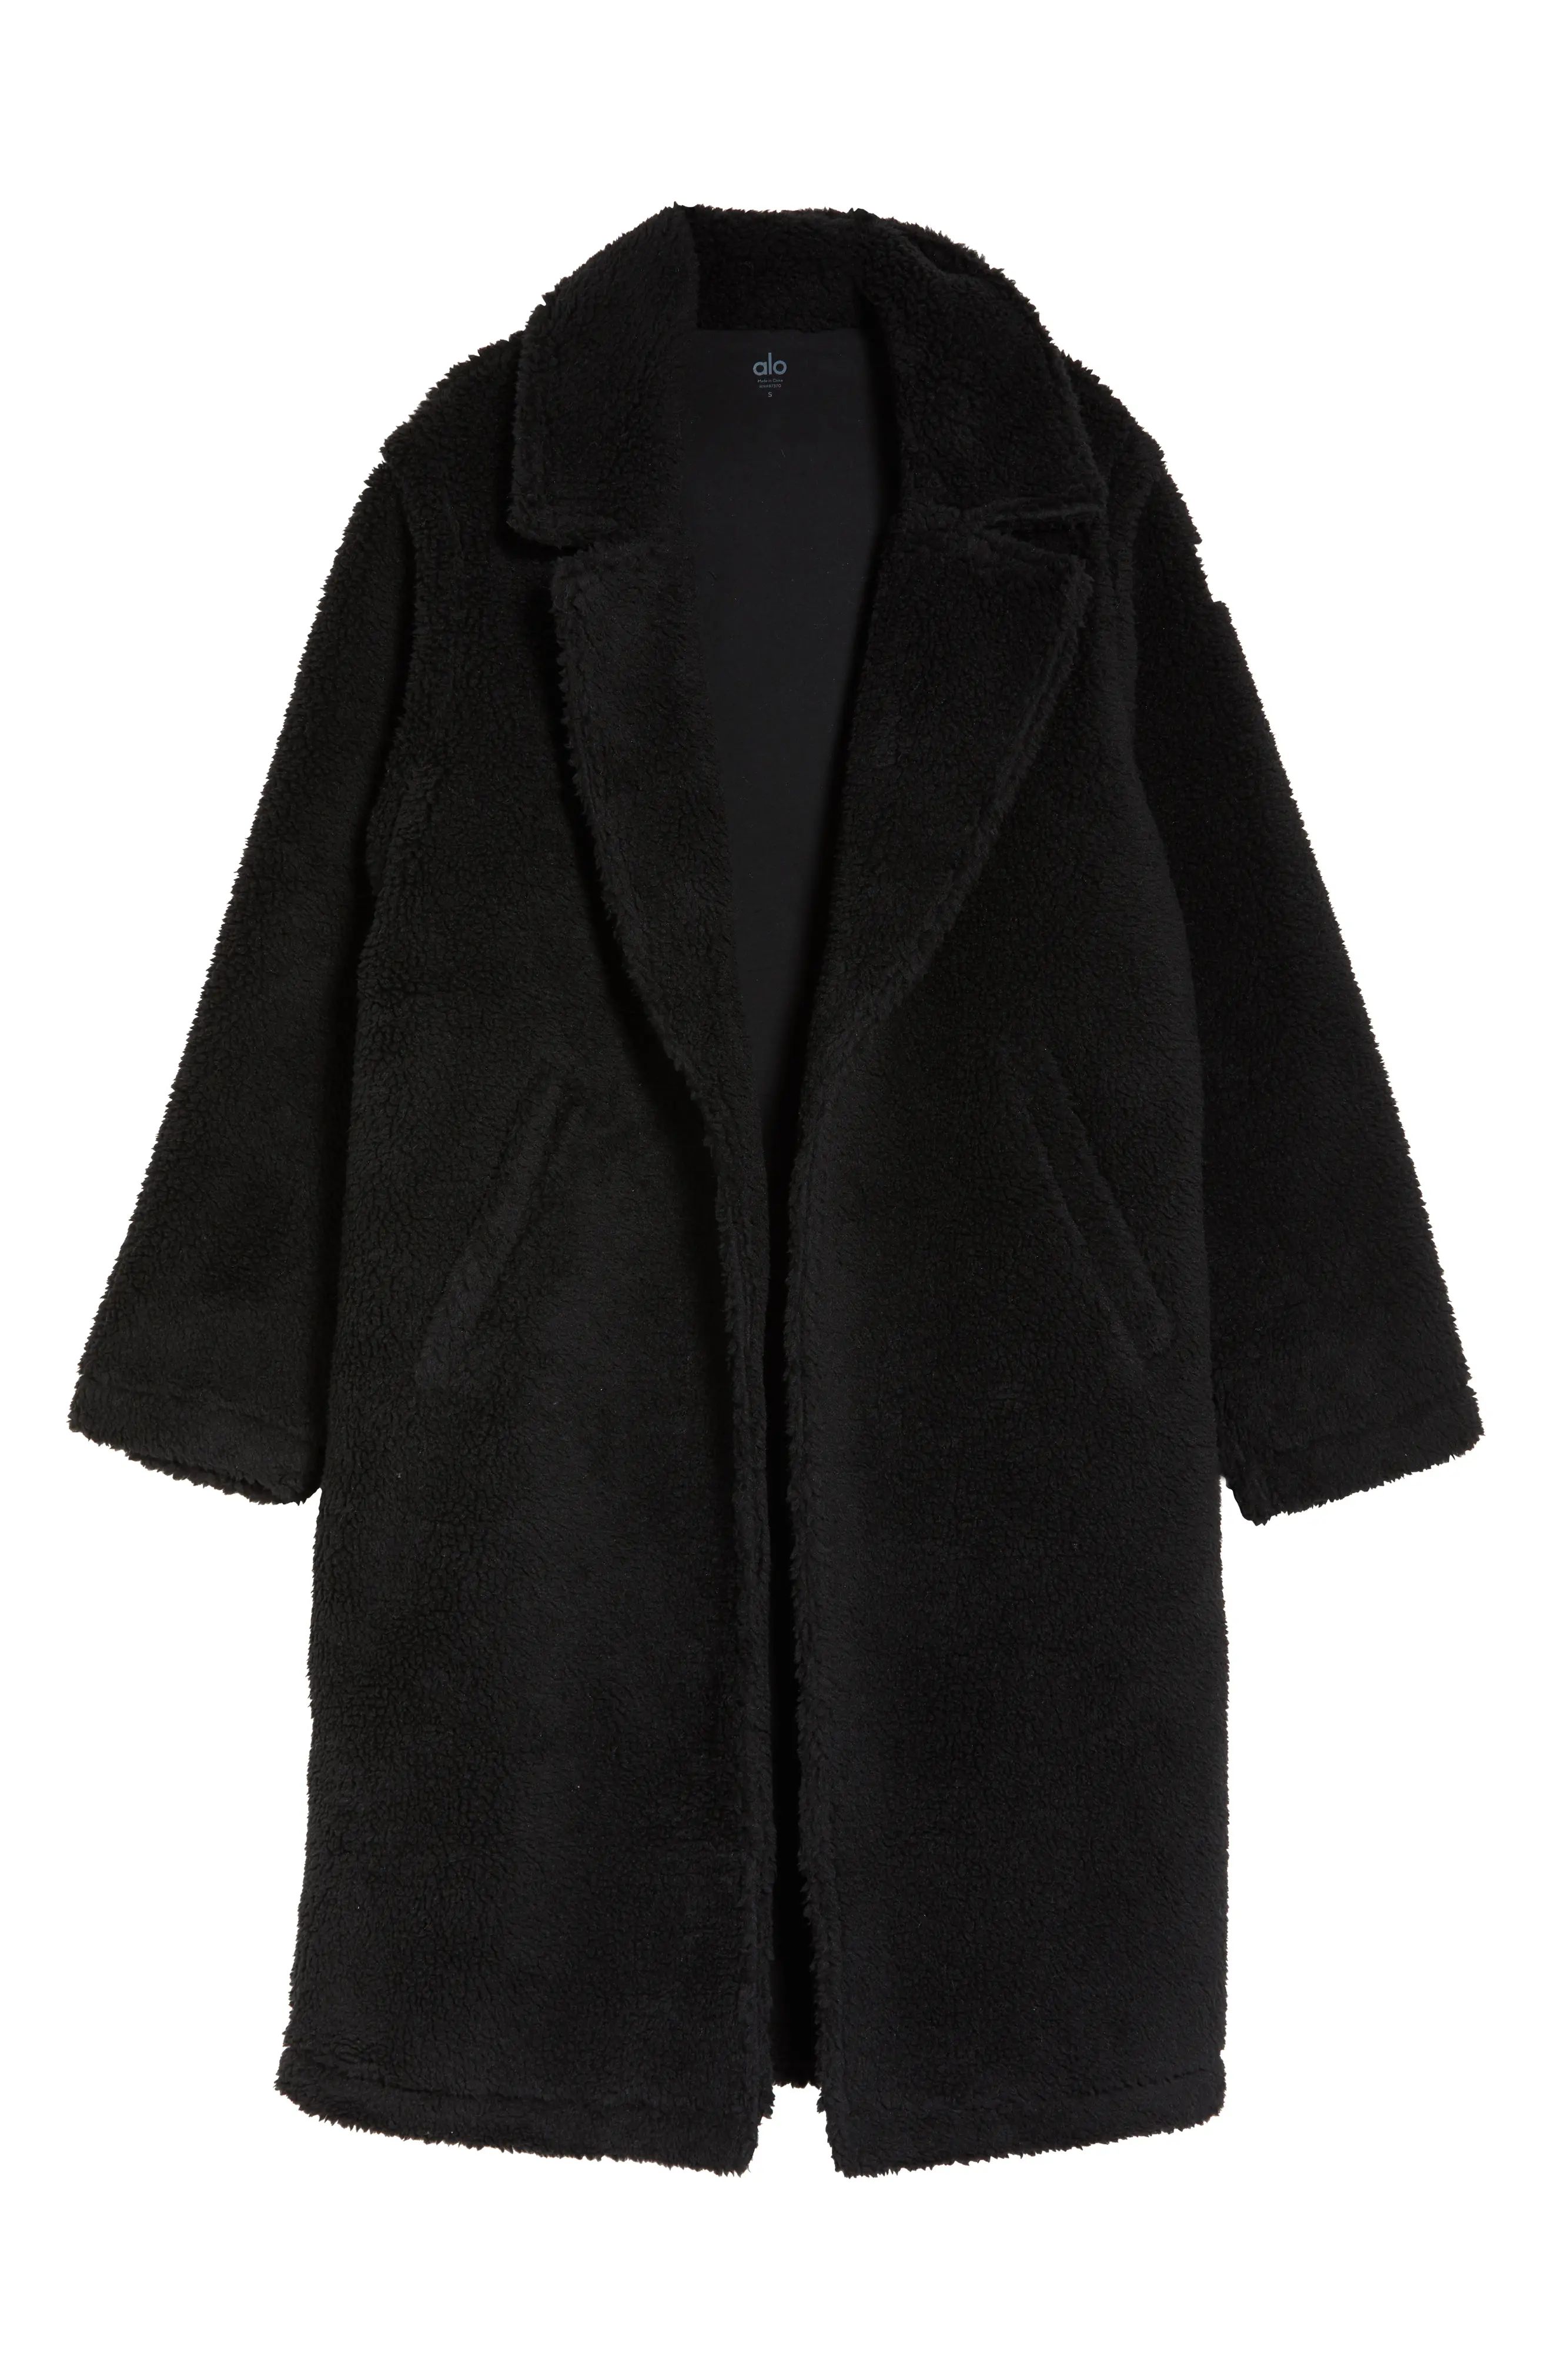 Alo Faux Shearling Coat, Size Medium in Black at Nordstrom | Nordstrom